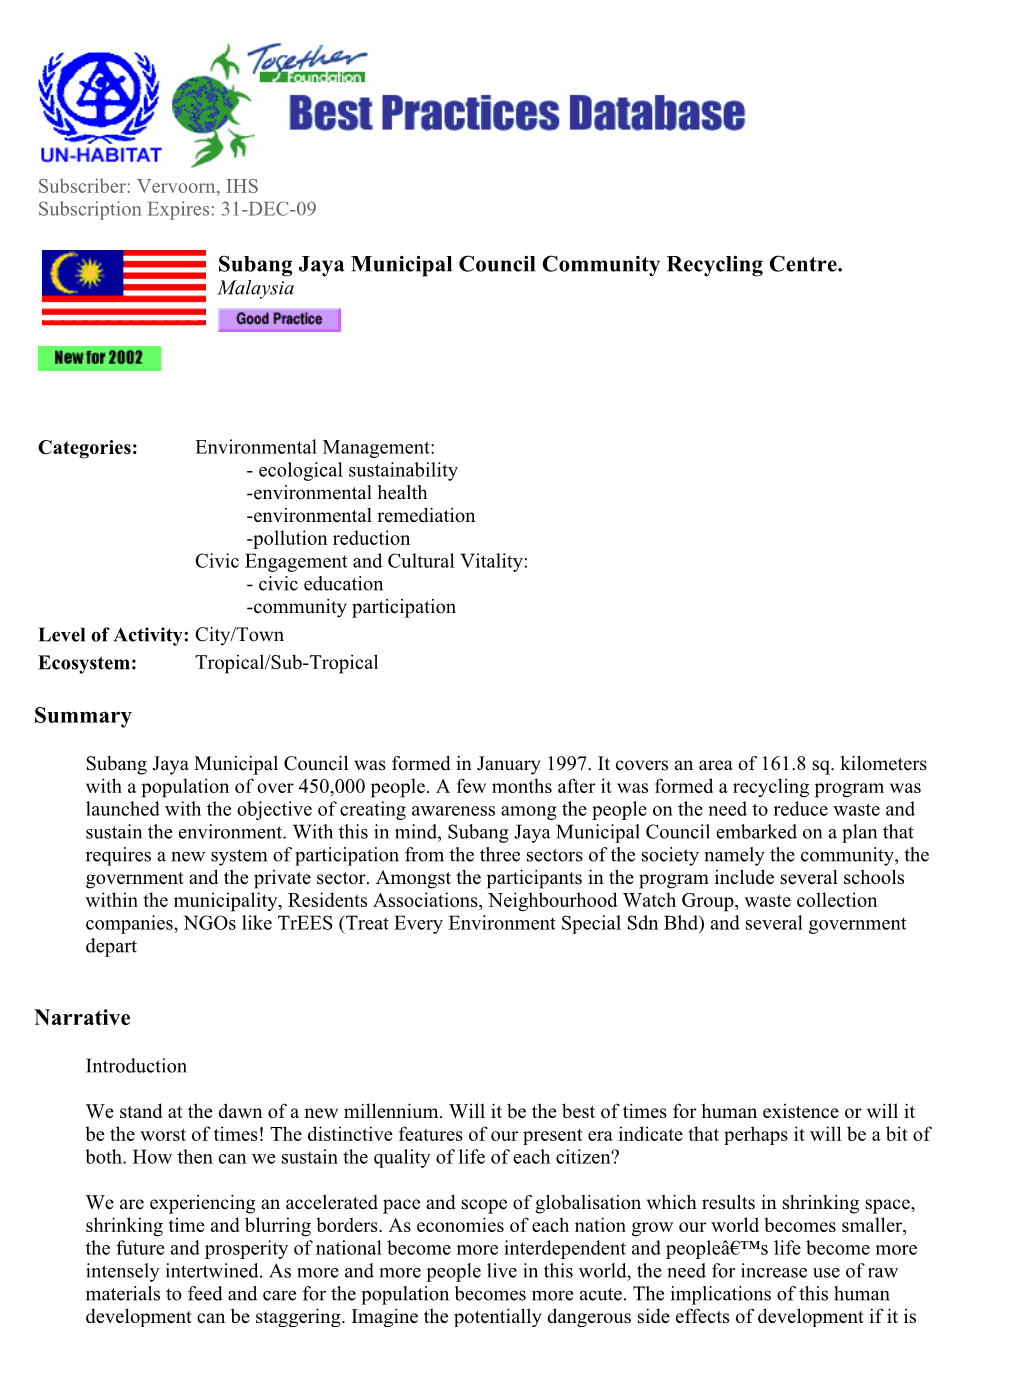 Summary Narrative Subang Jaya Municipal Council Community